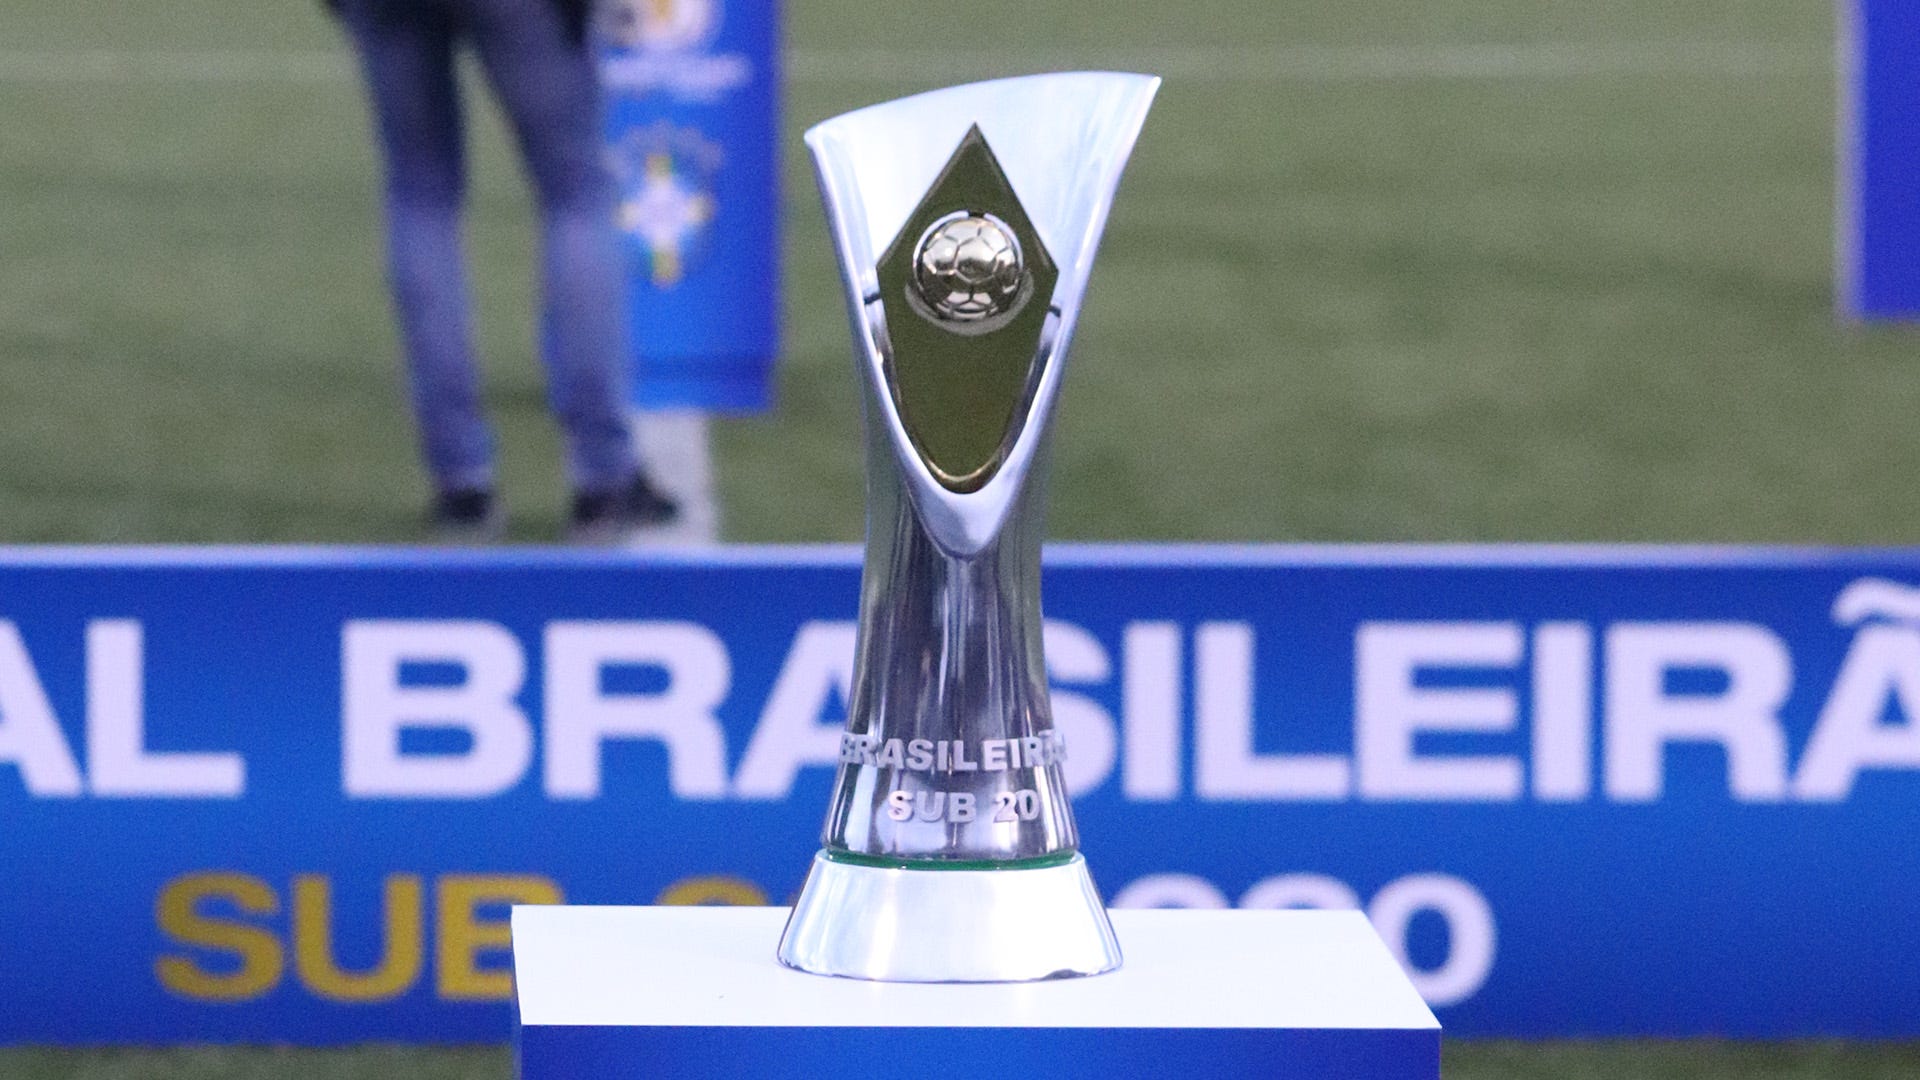 Campeonato Brasileiro Absoluto: Quartas de final